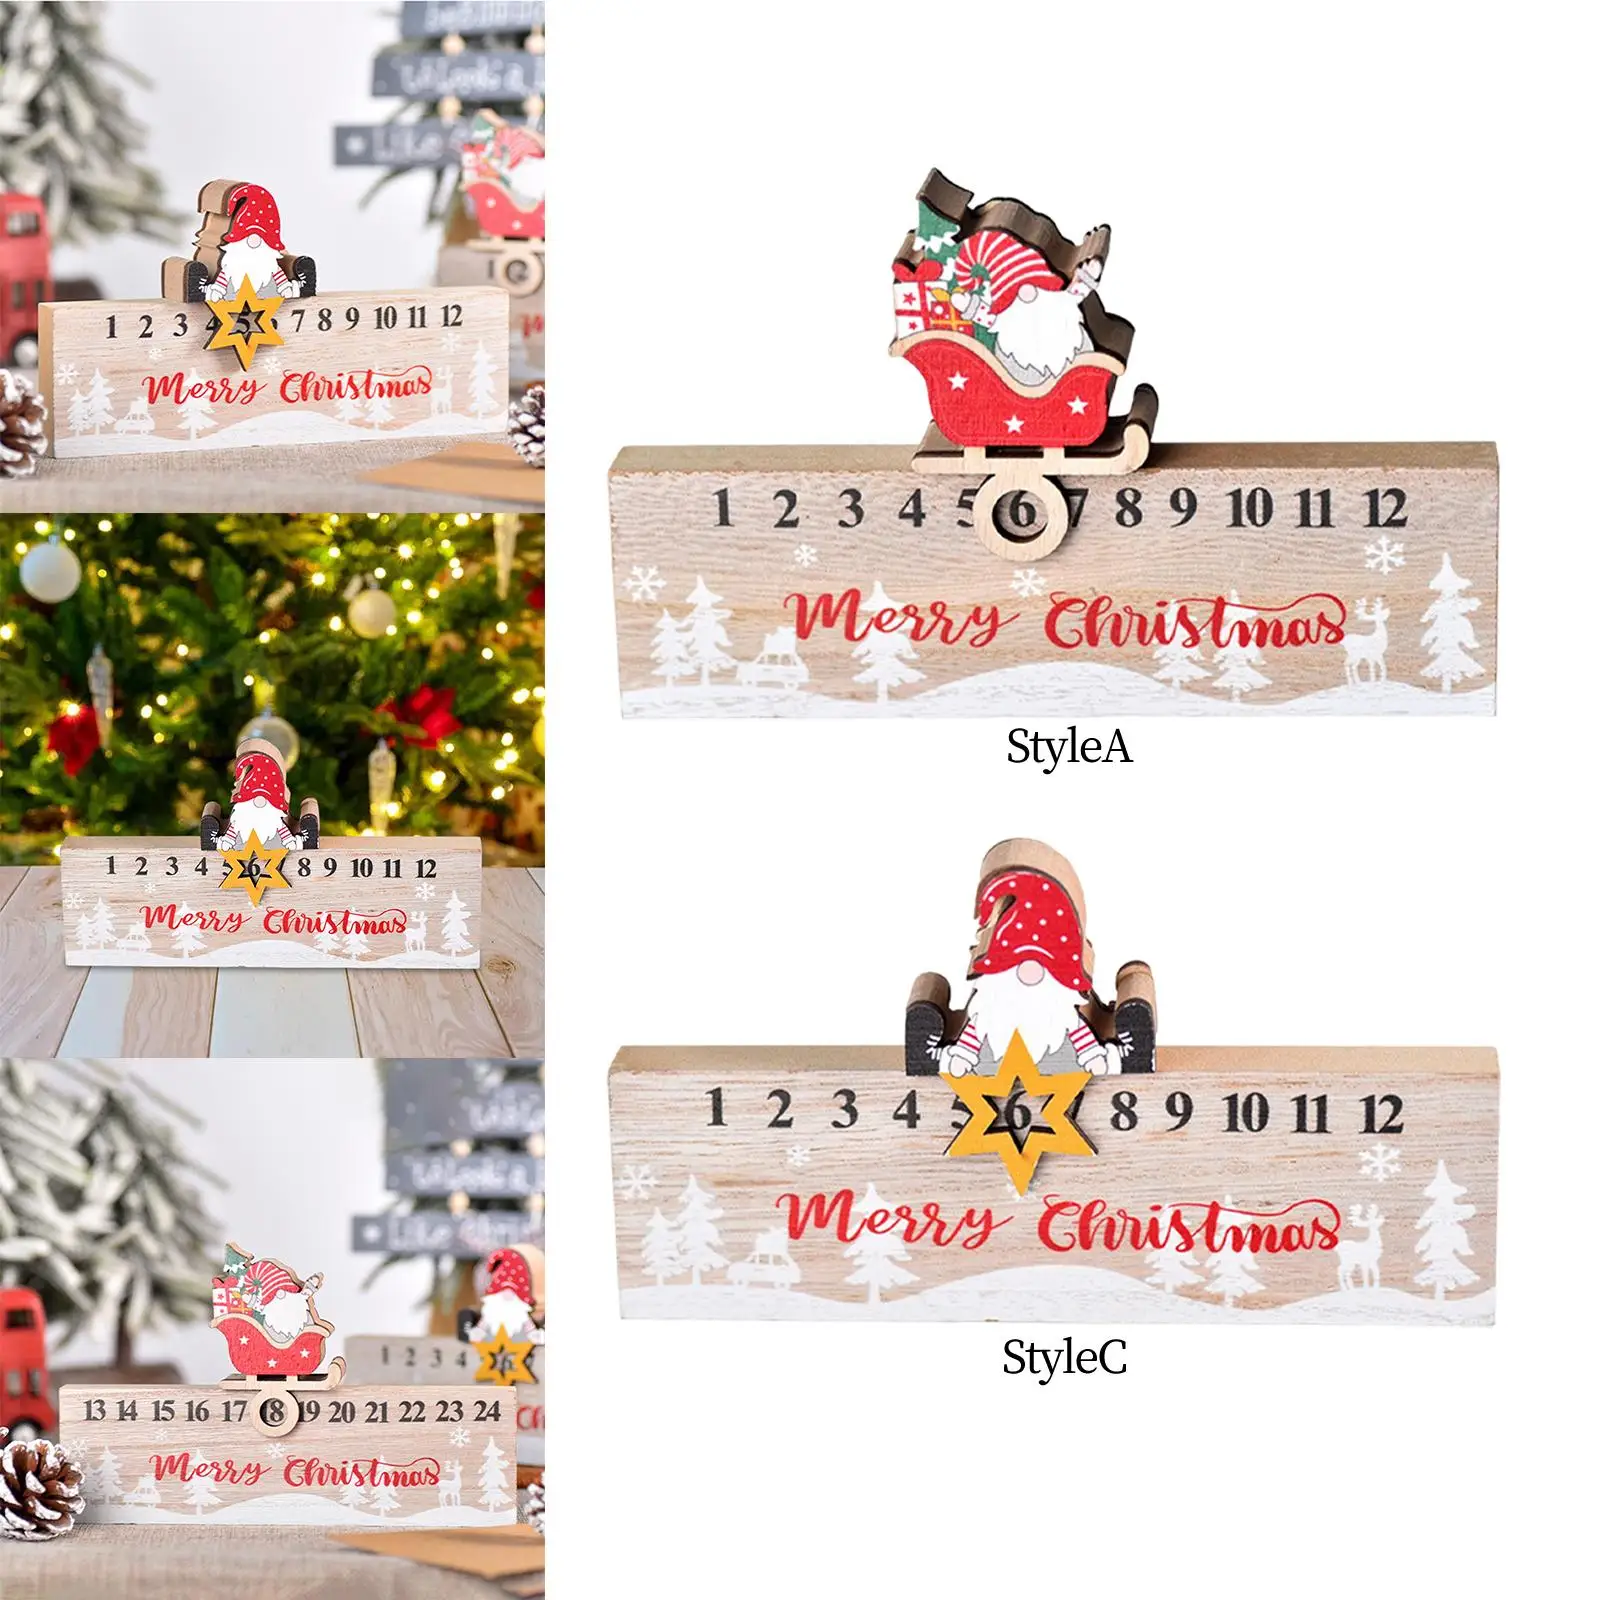 Christmas Desk Calendar Wood Santa Ornament Holiday Advent Calendar for Indoor Office Xmas Decor Kids Gifts